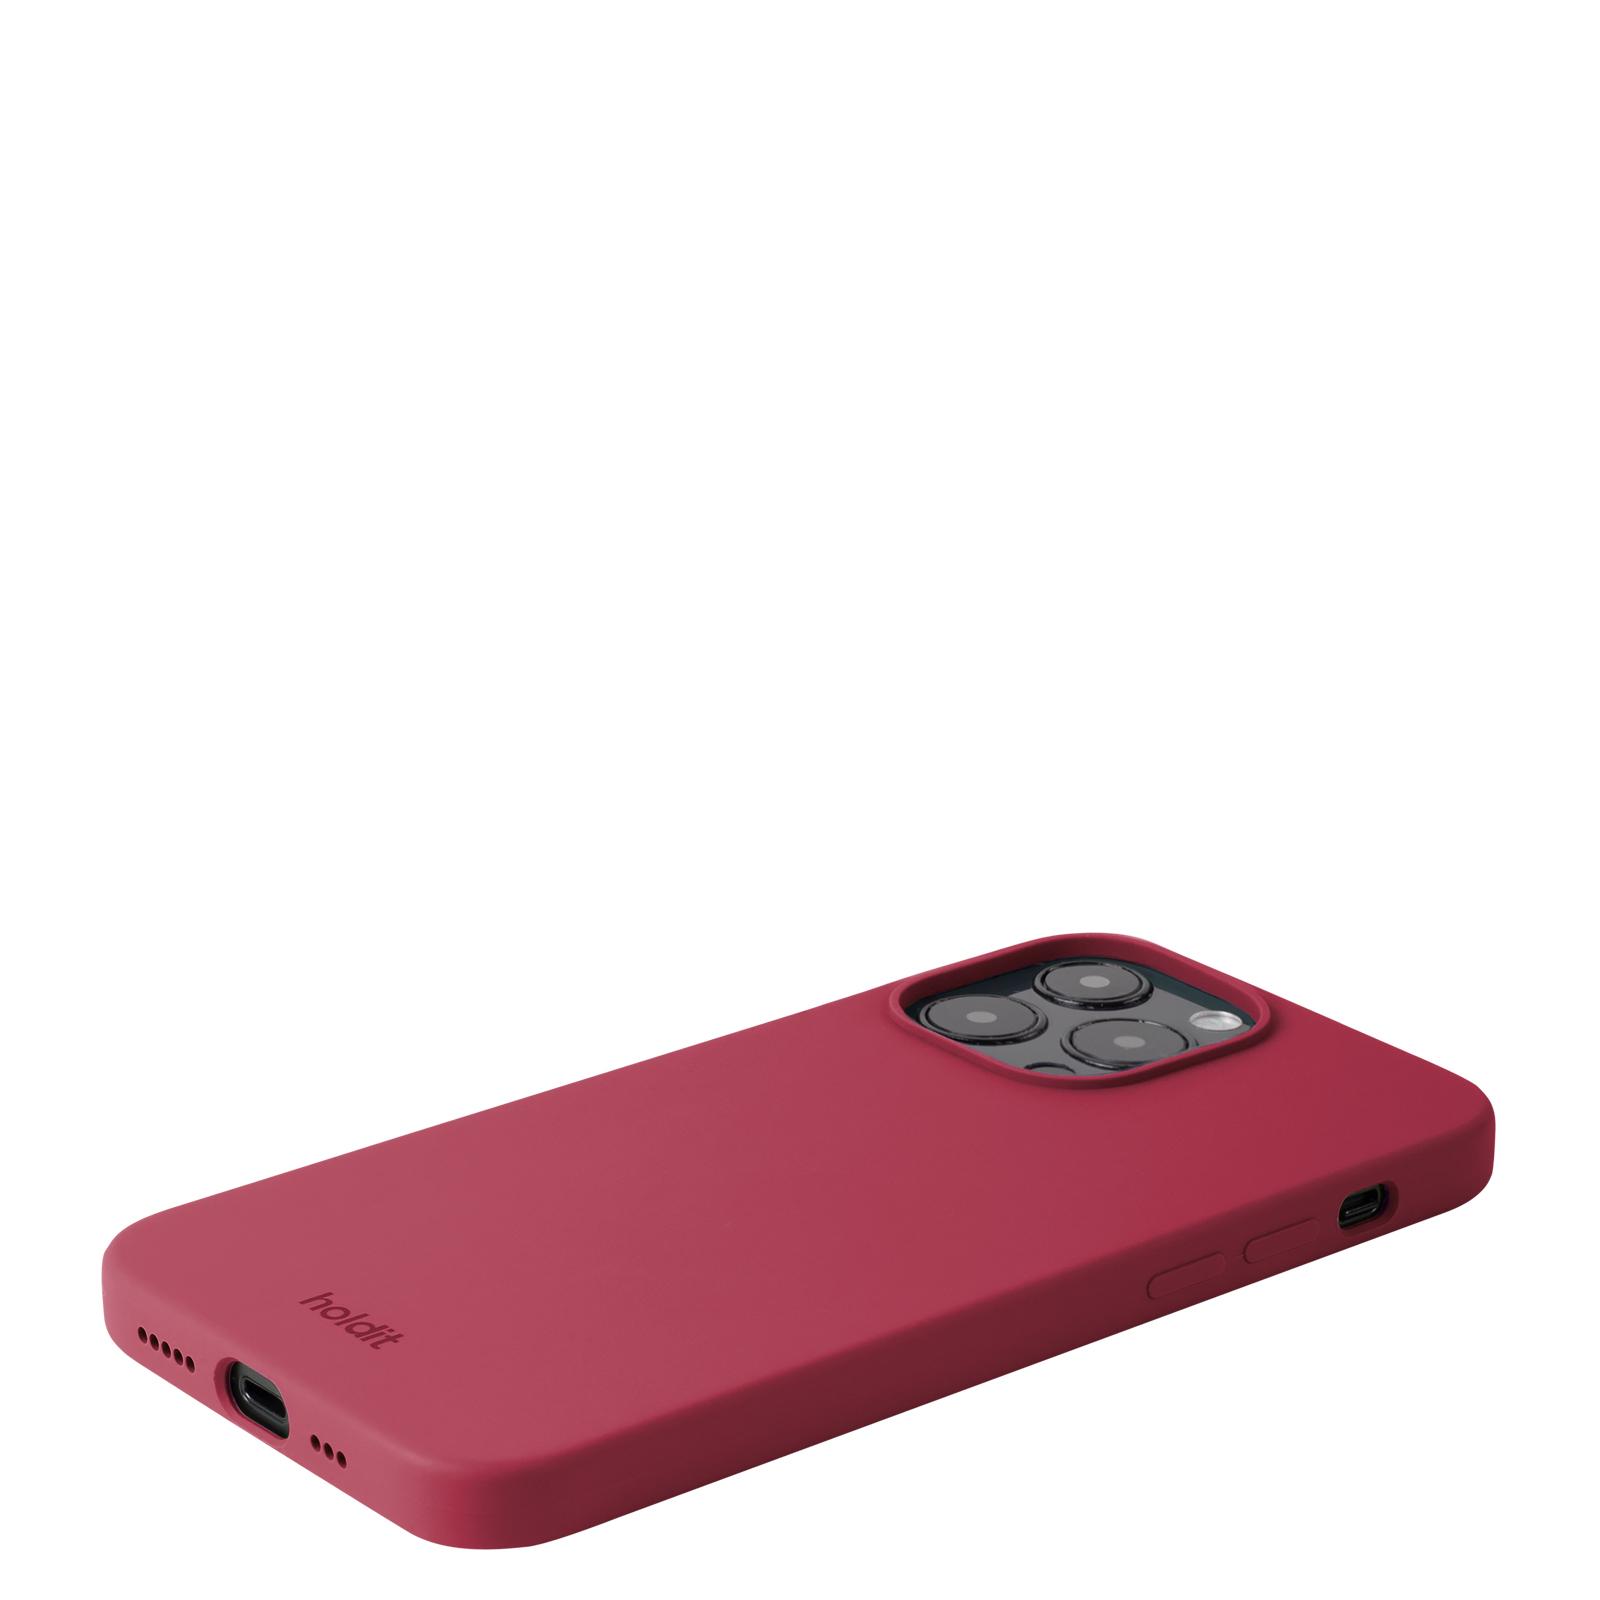 Гръб Holdit за iPhone 15 Pro Max, Silicone Case, Red Velvet